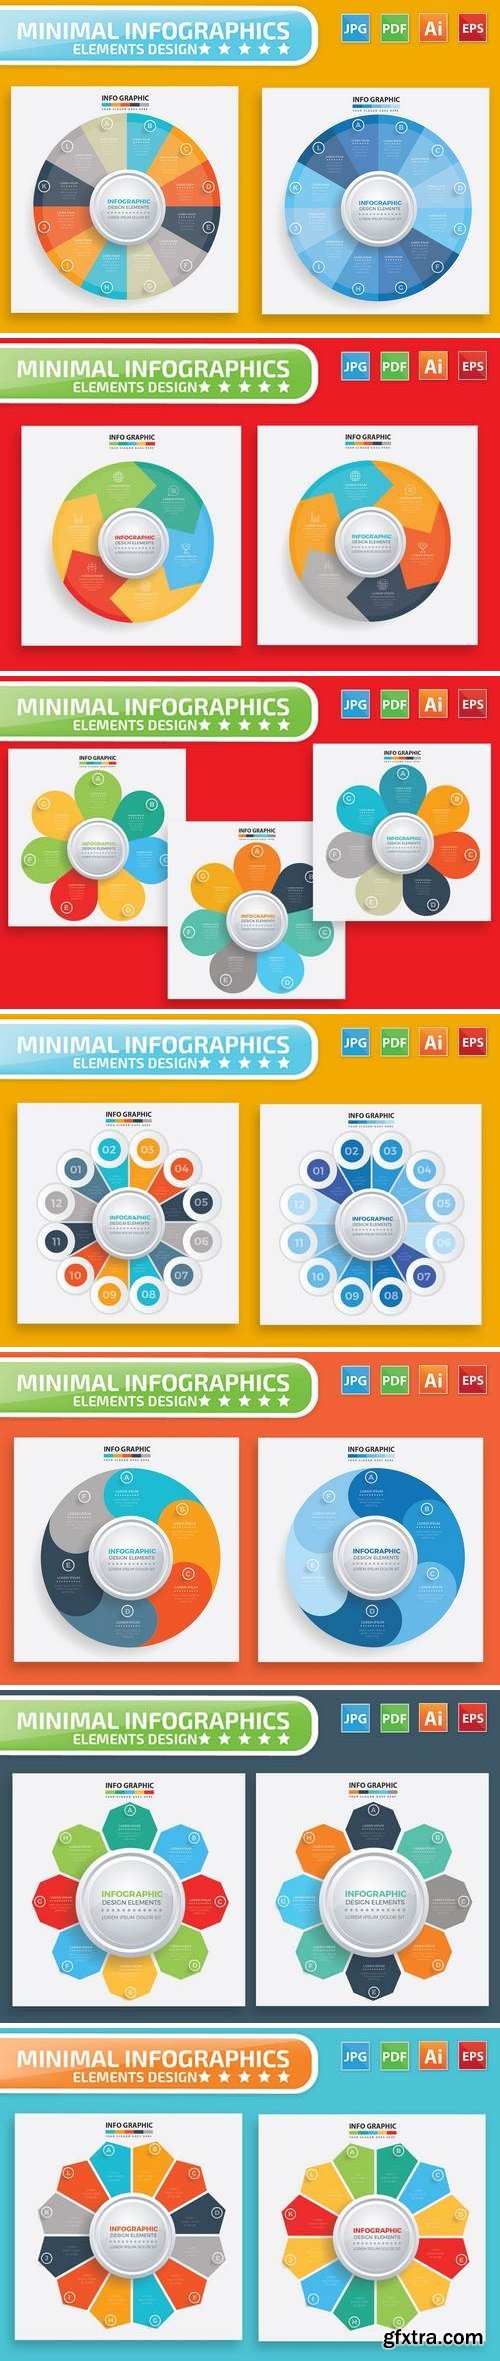 Infographic Design Bundle